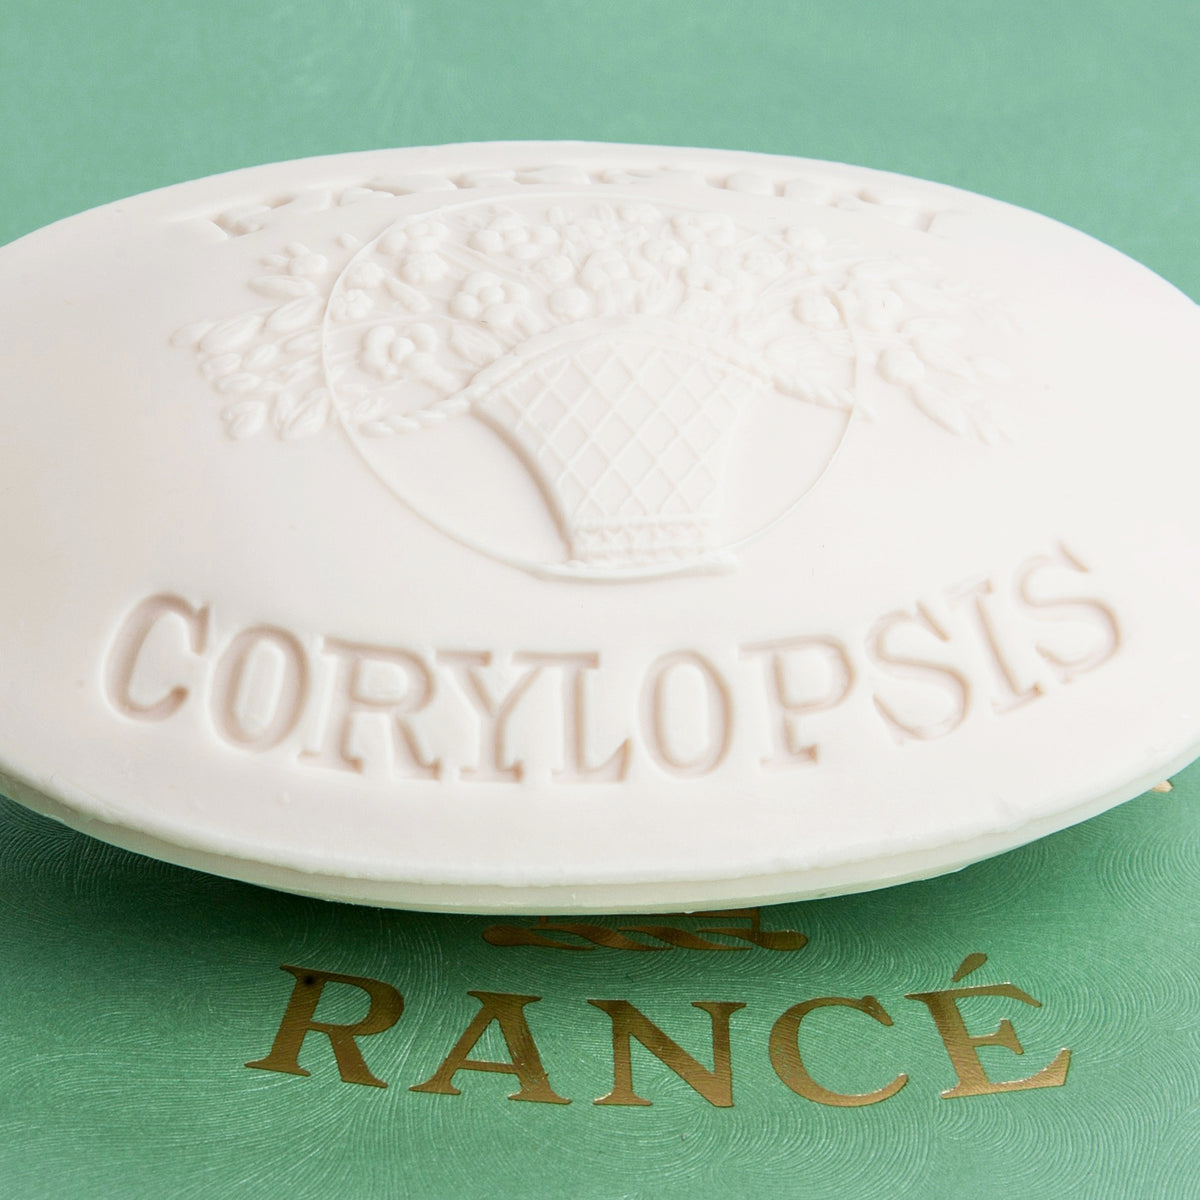 Corylopsis Soaps, Box of 6